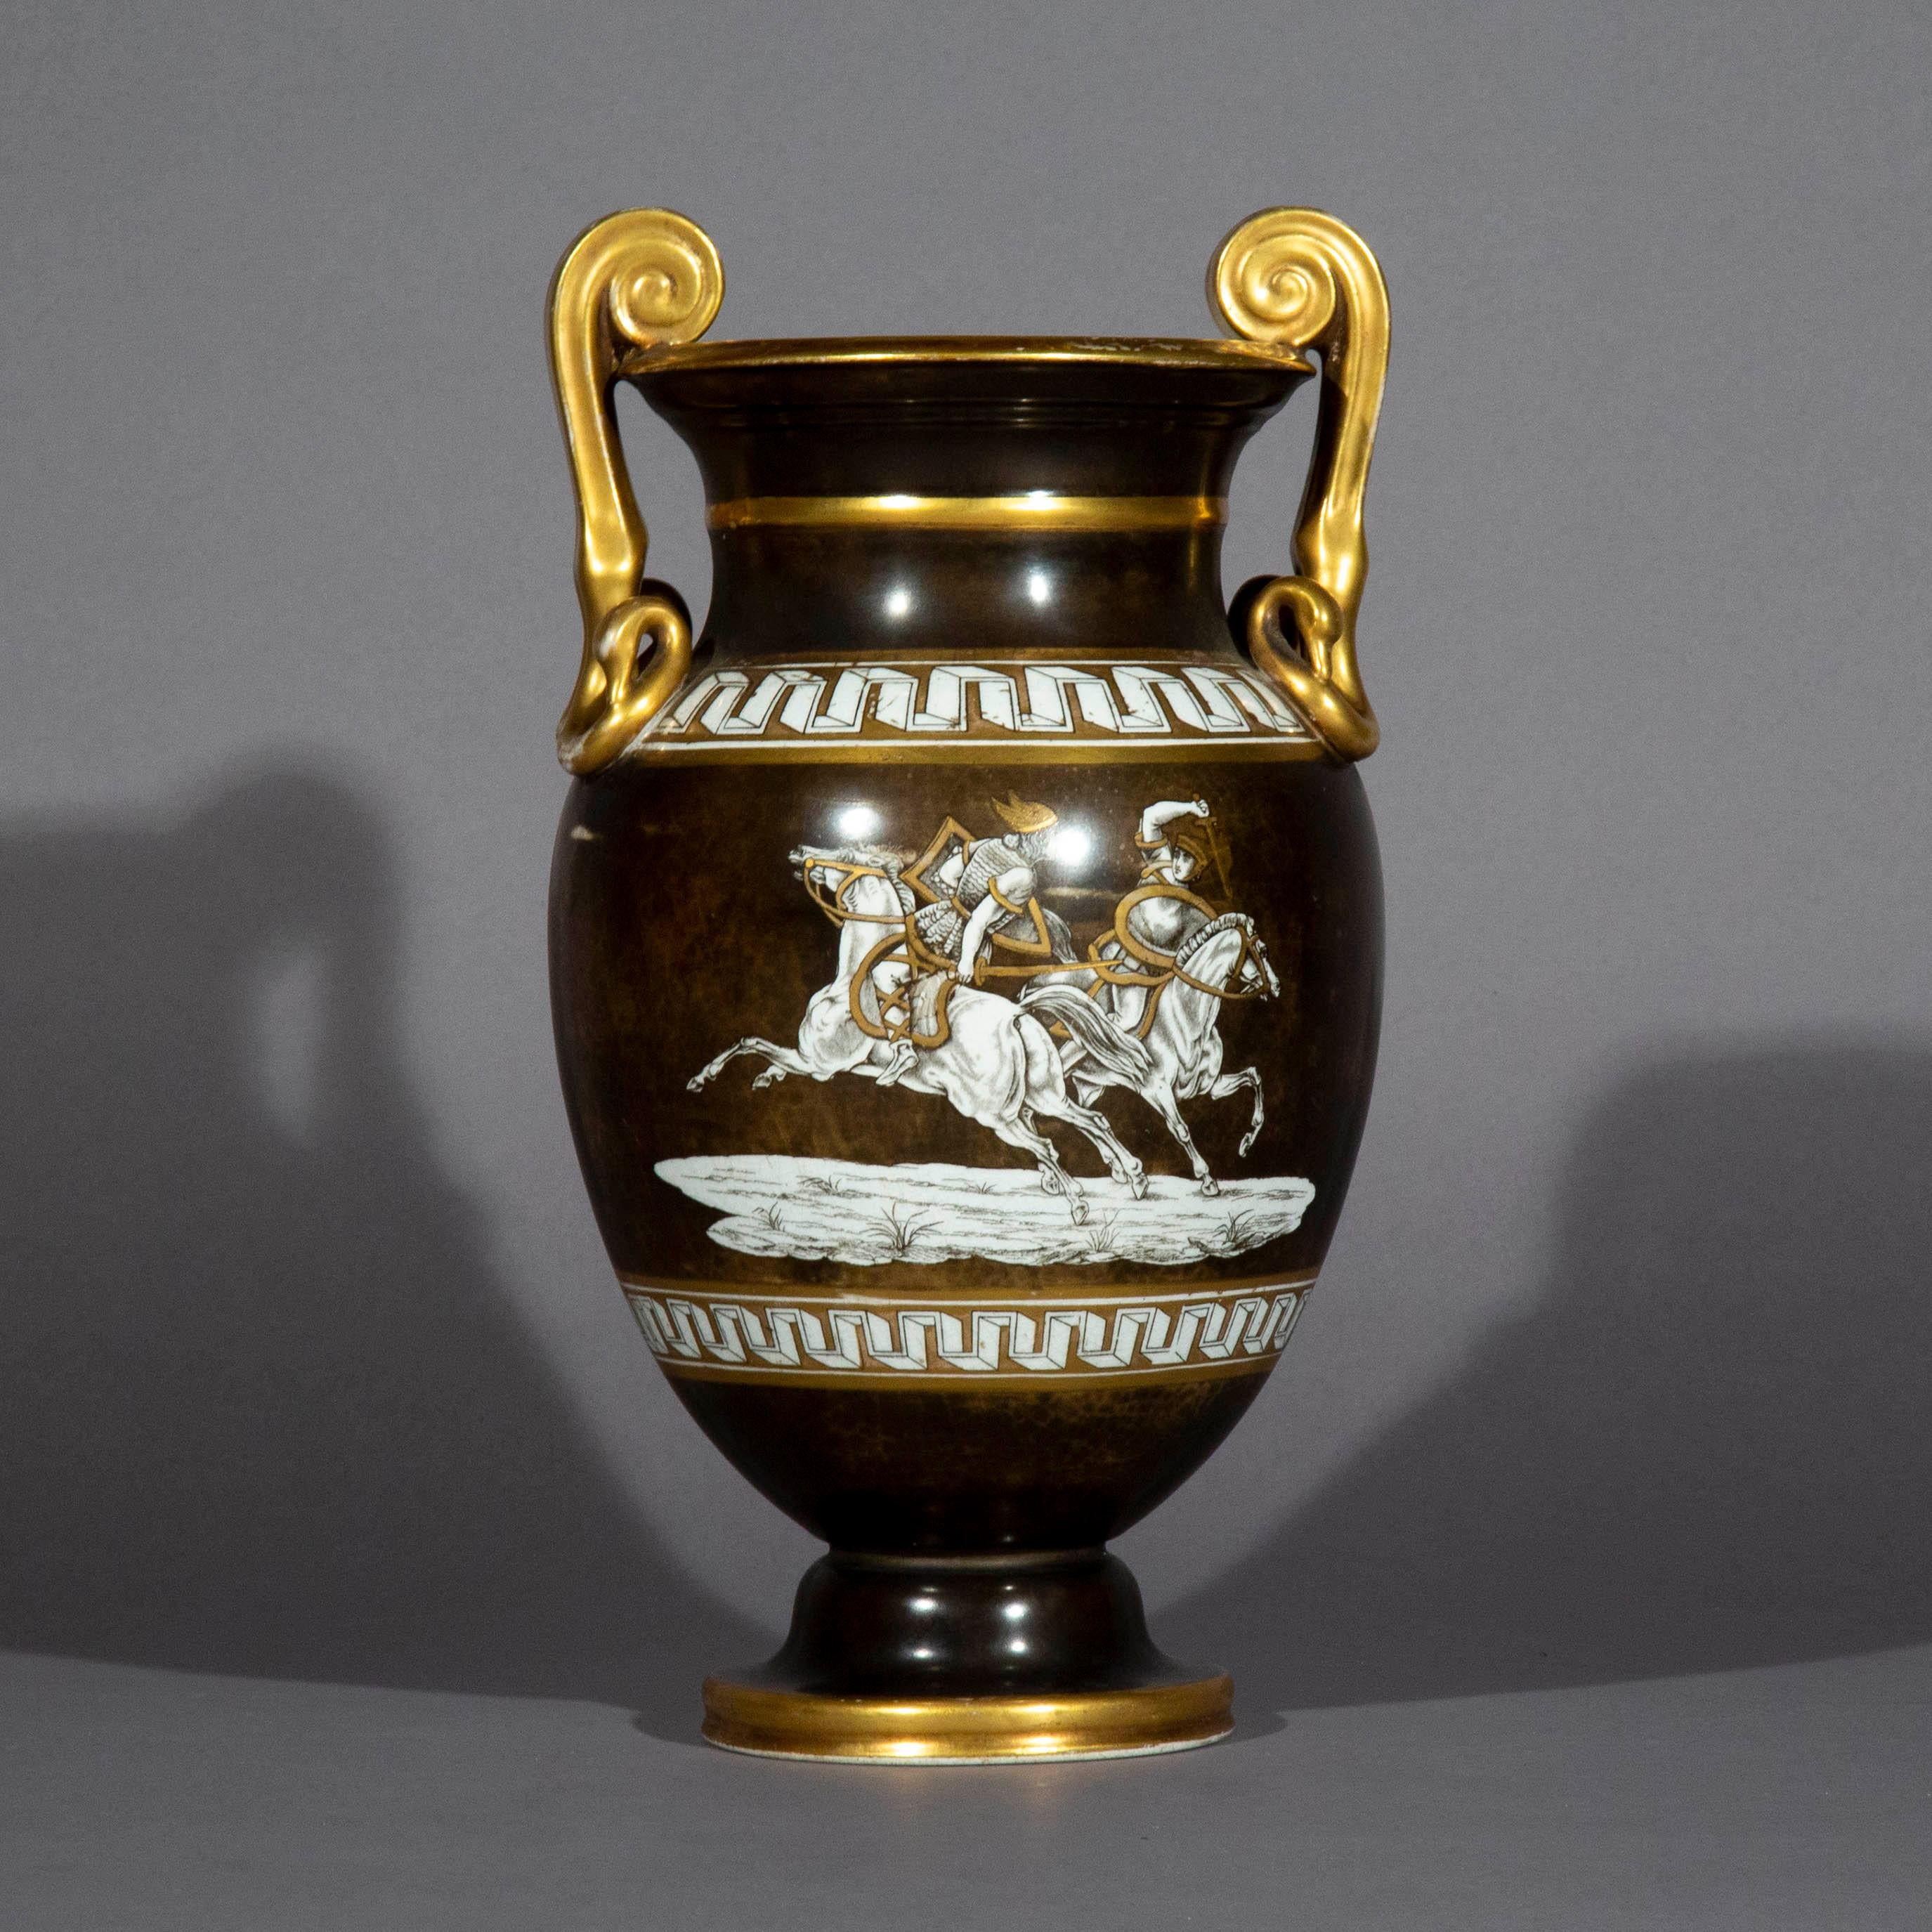 Painted Antique Grand Tour Porcelain Vase, Early 19th Century